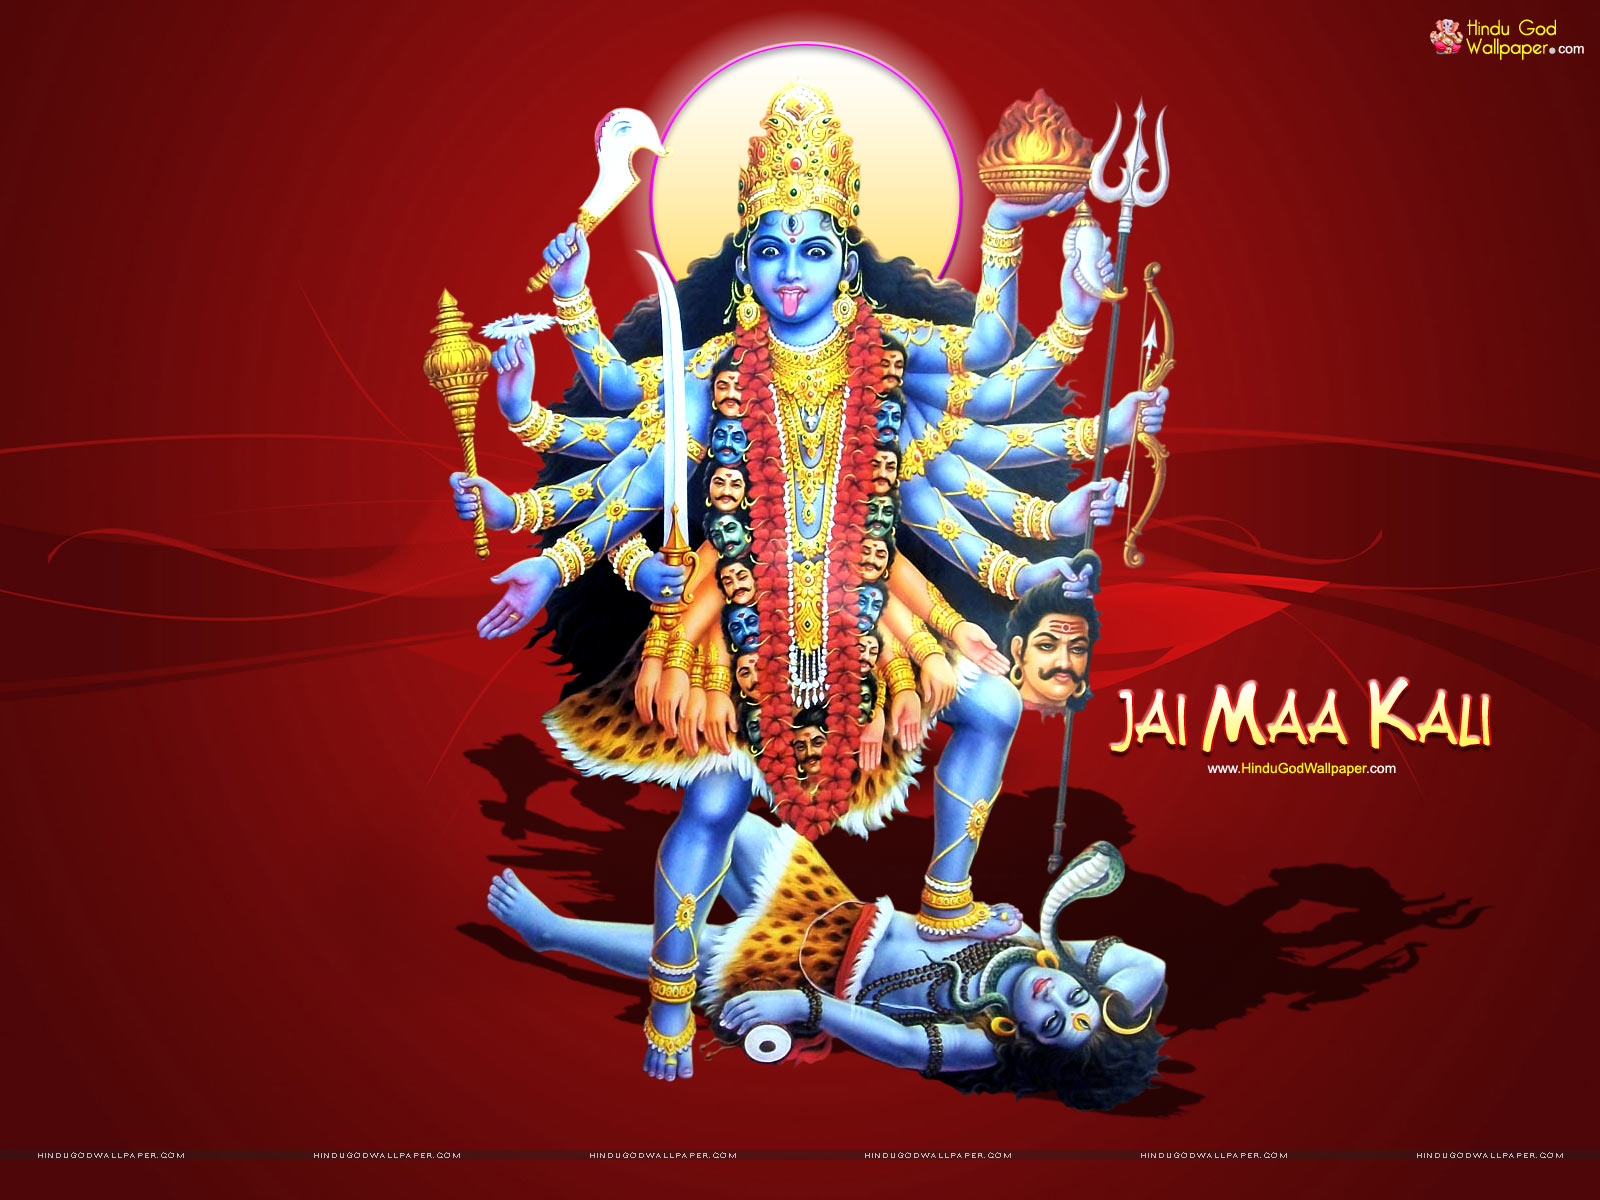 Jai Kali Kalkatte Wali Wallpaper Free Download